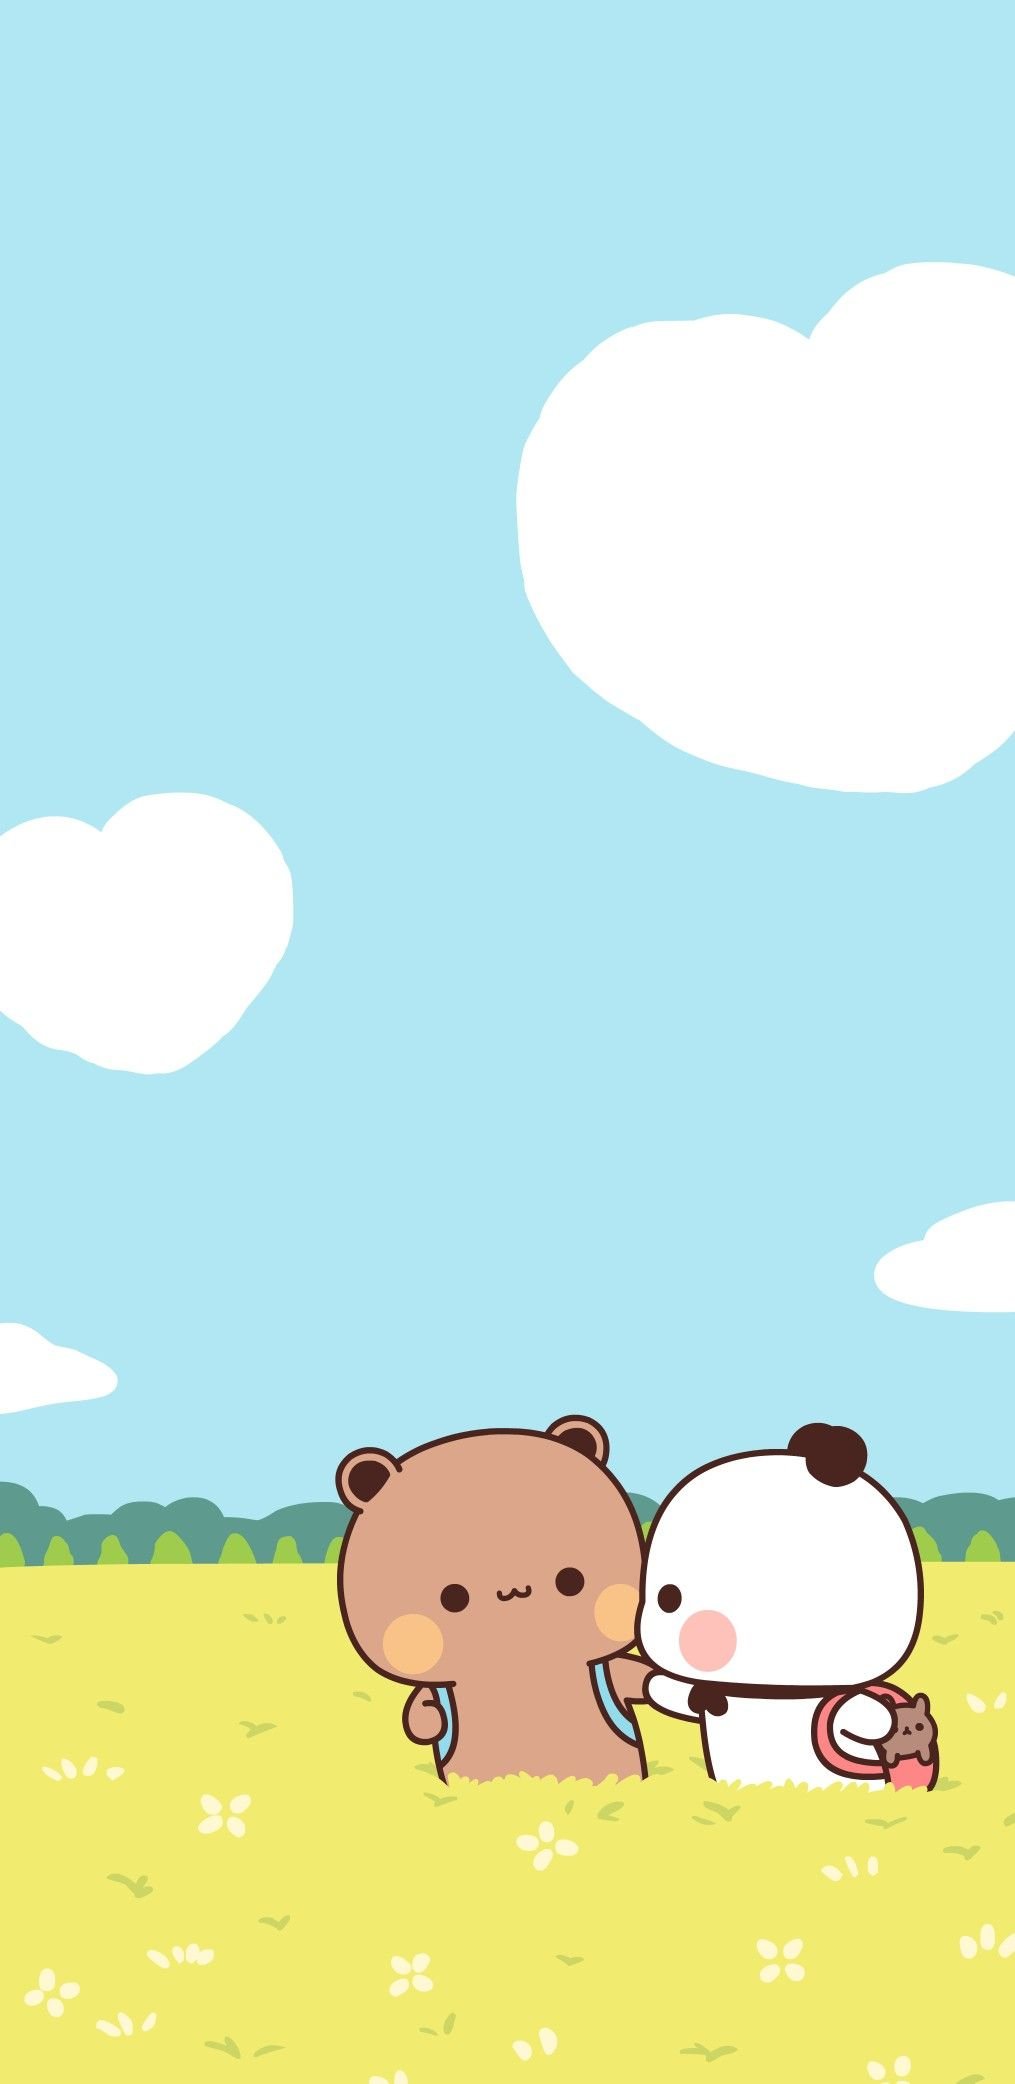 76 Cute Teddy Bears Wallpapers  WallpaperSafari